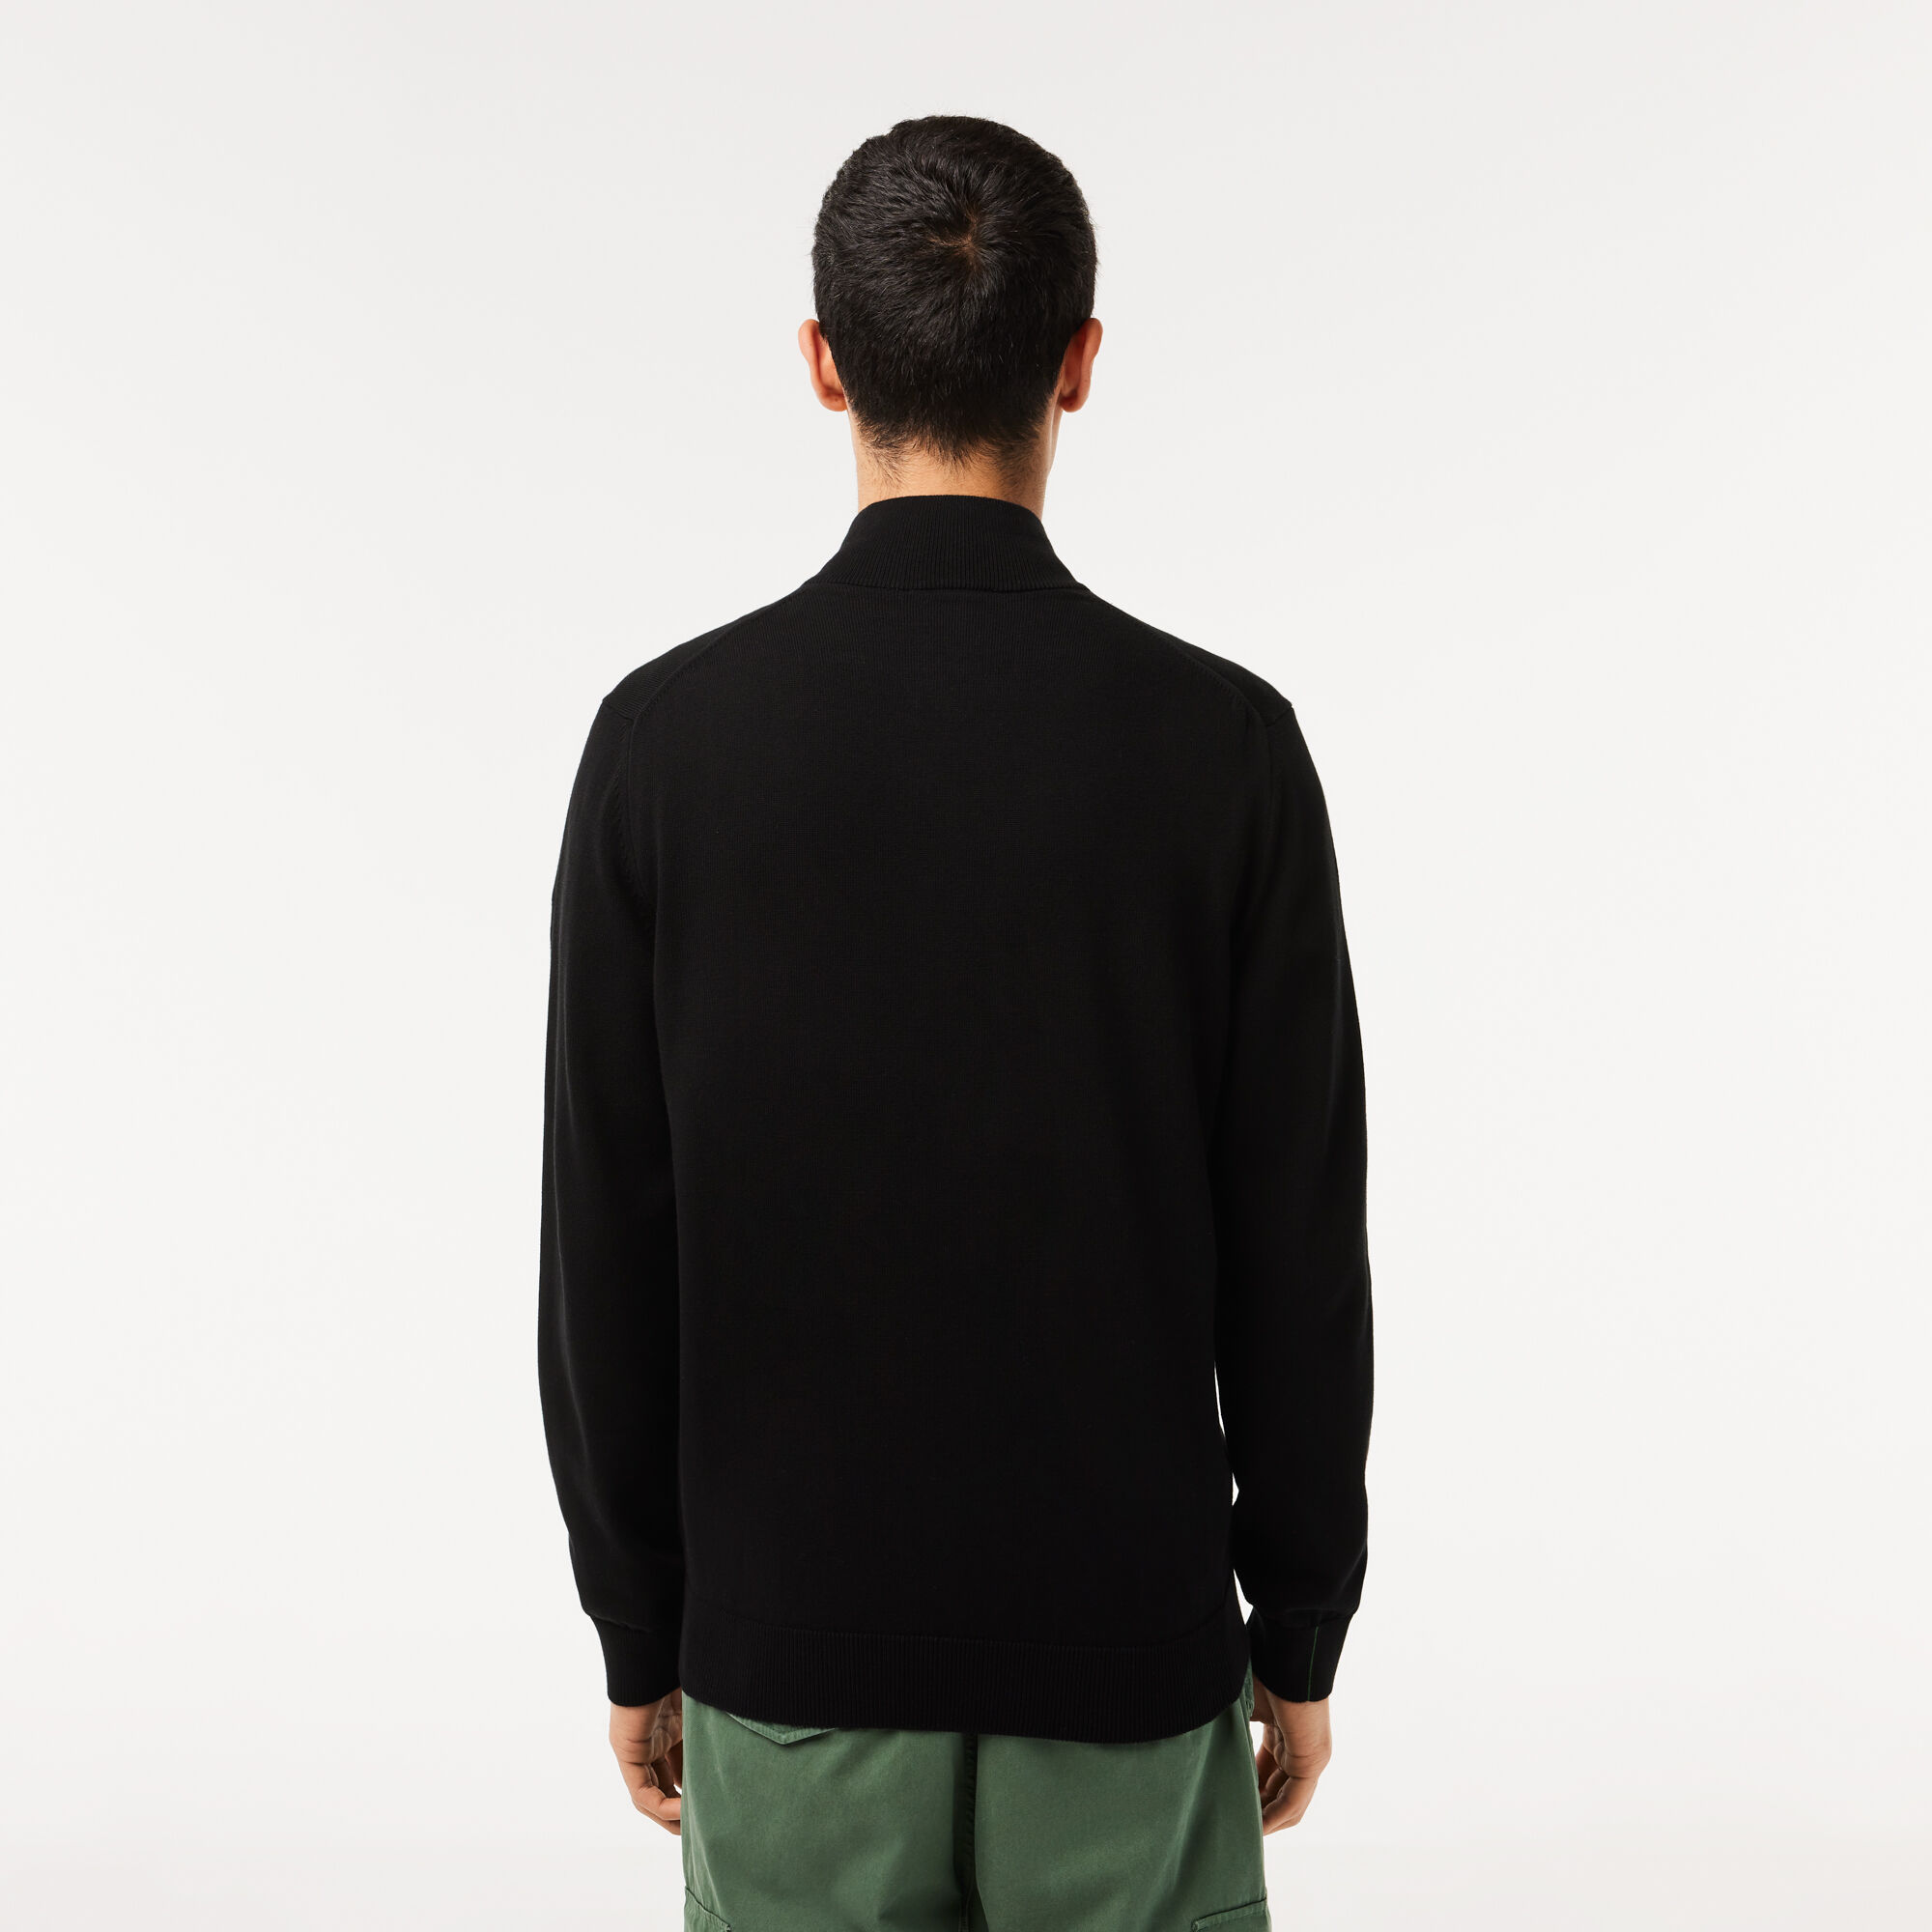 Men's Stand-up Collar Organic Cotton Zippered Sweater